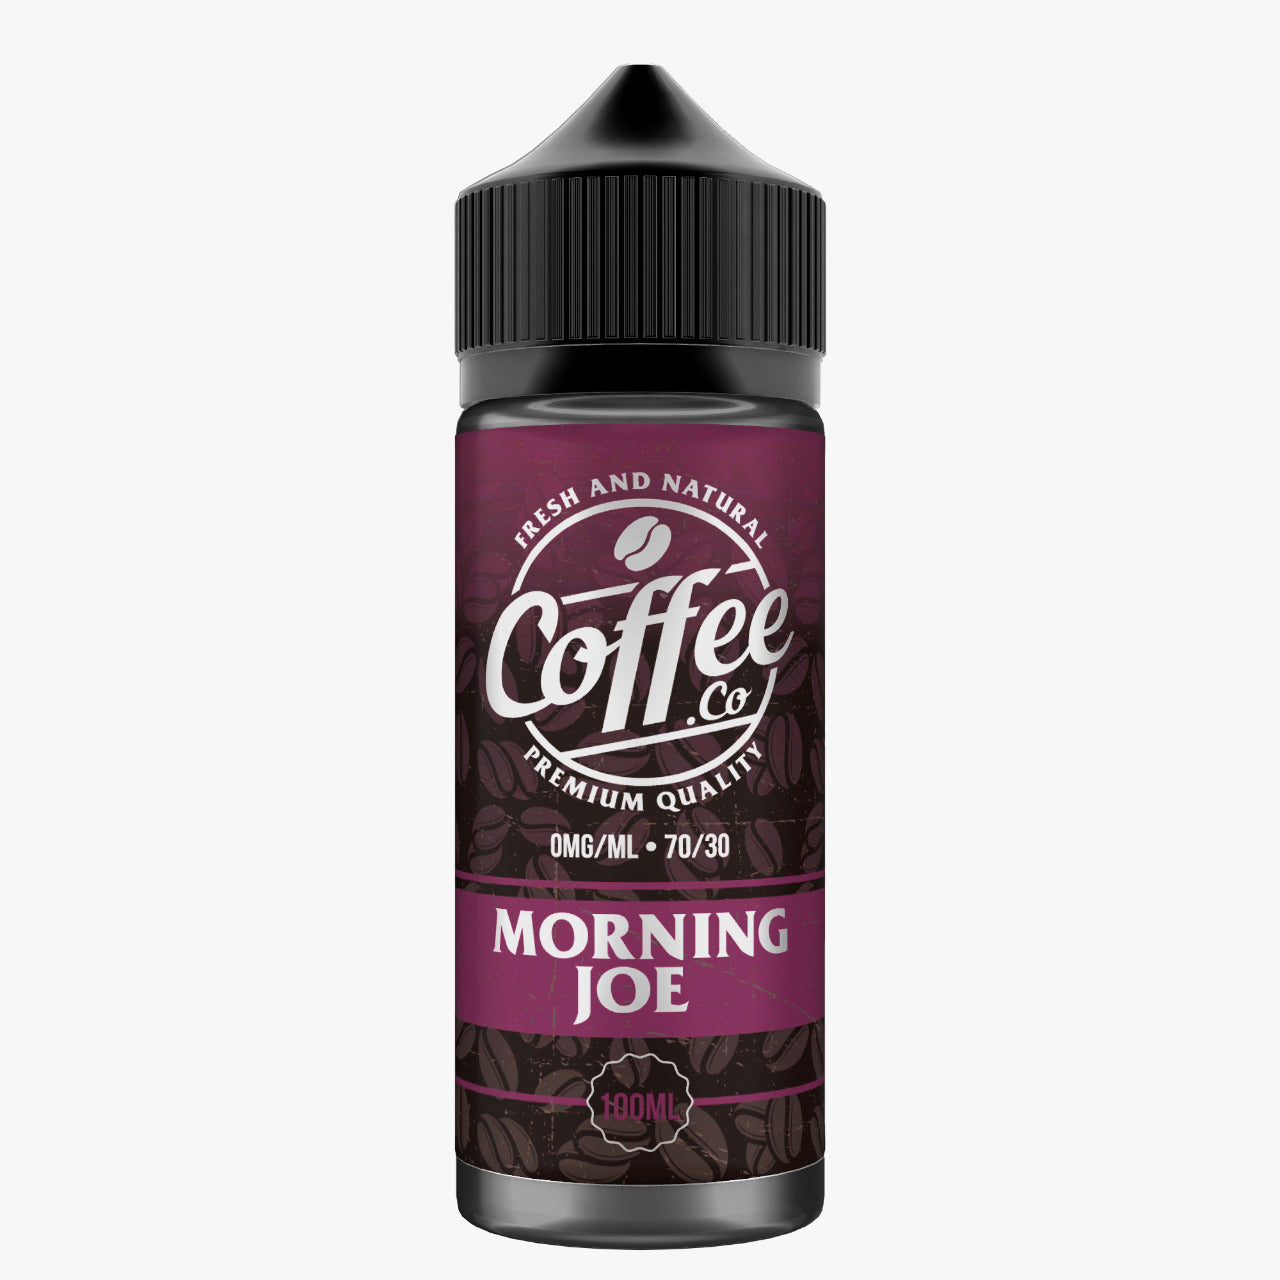 MORNING JOE 100ML E LIQUID COFFEE CO